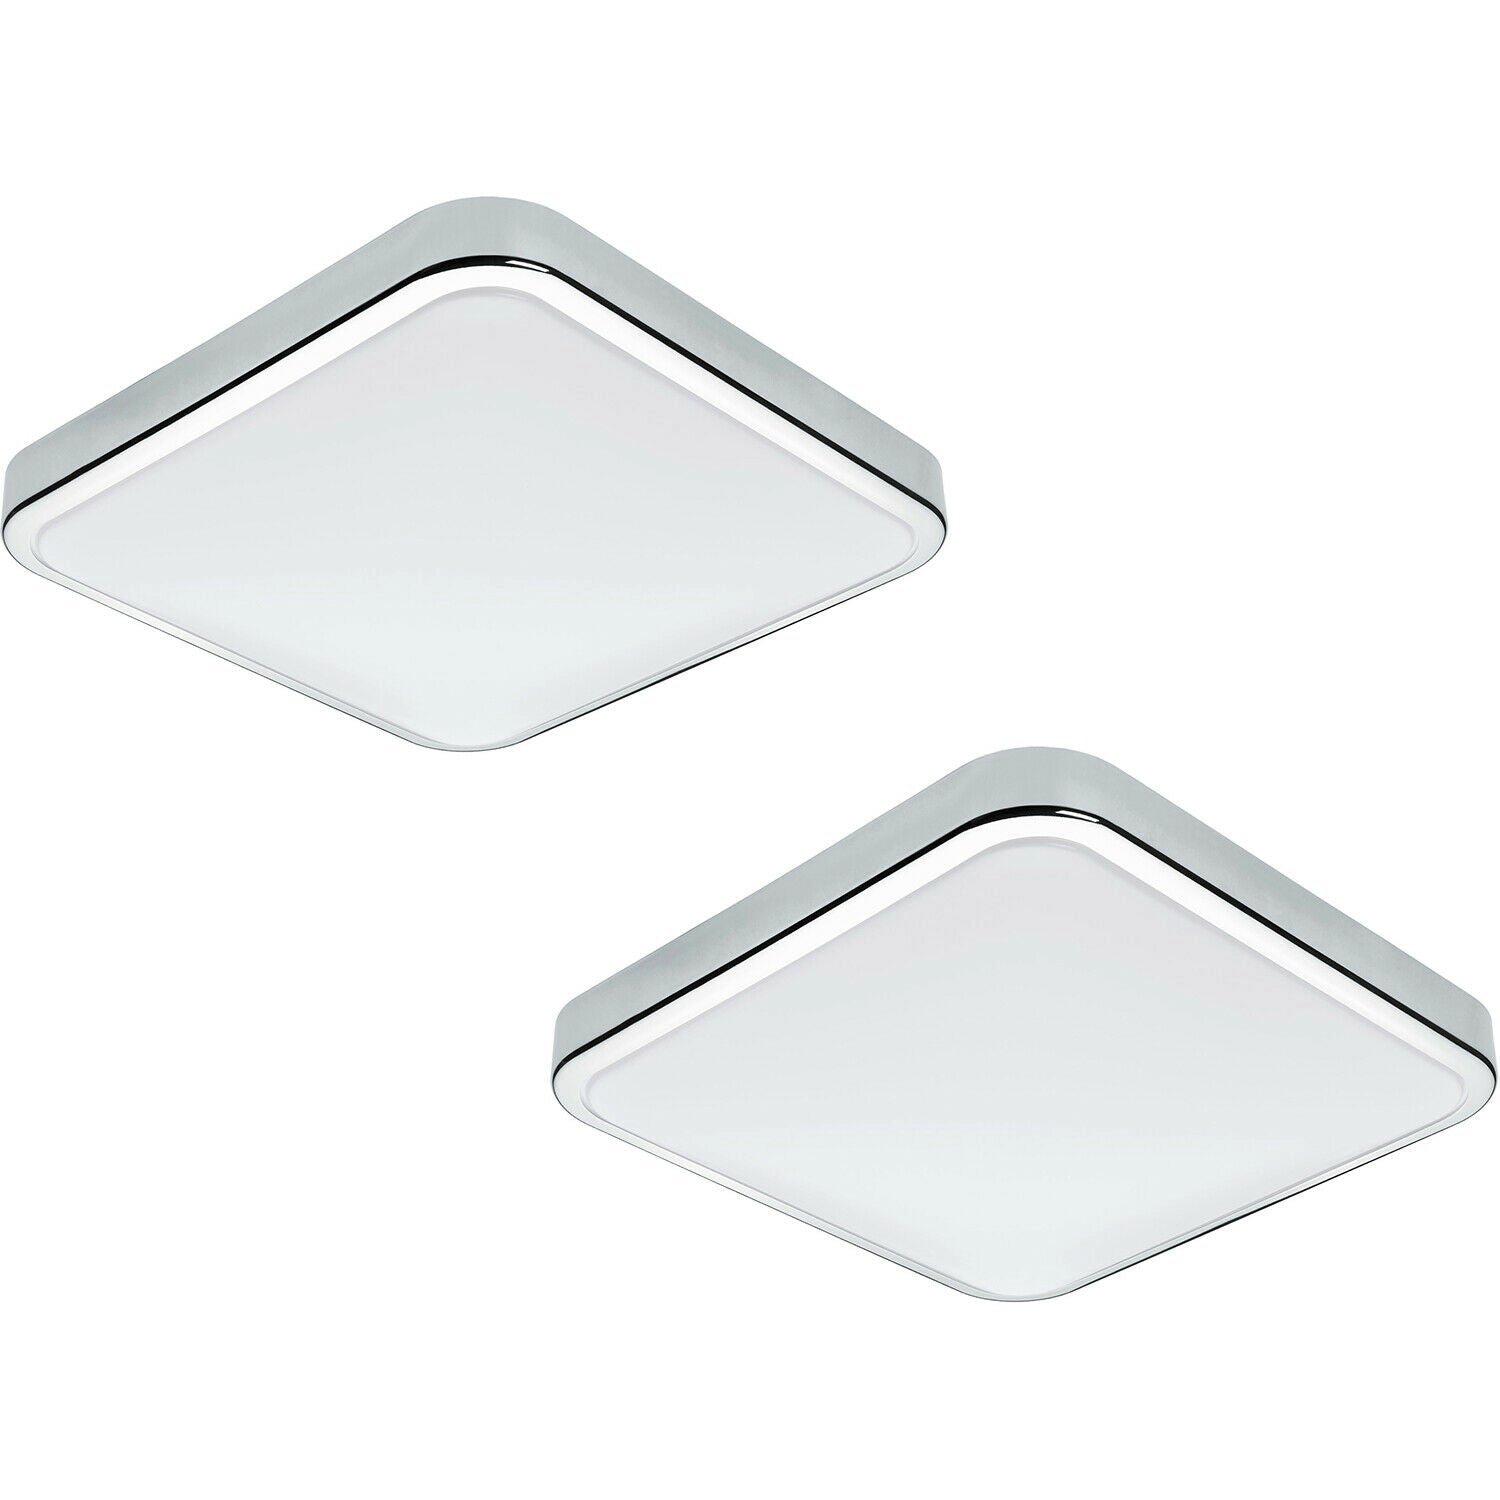 2 PACK Wall Flush Ceiling Light IP44 Bathroom Chrome Shade White Plastic LED 16W